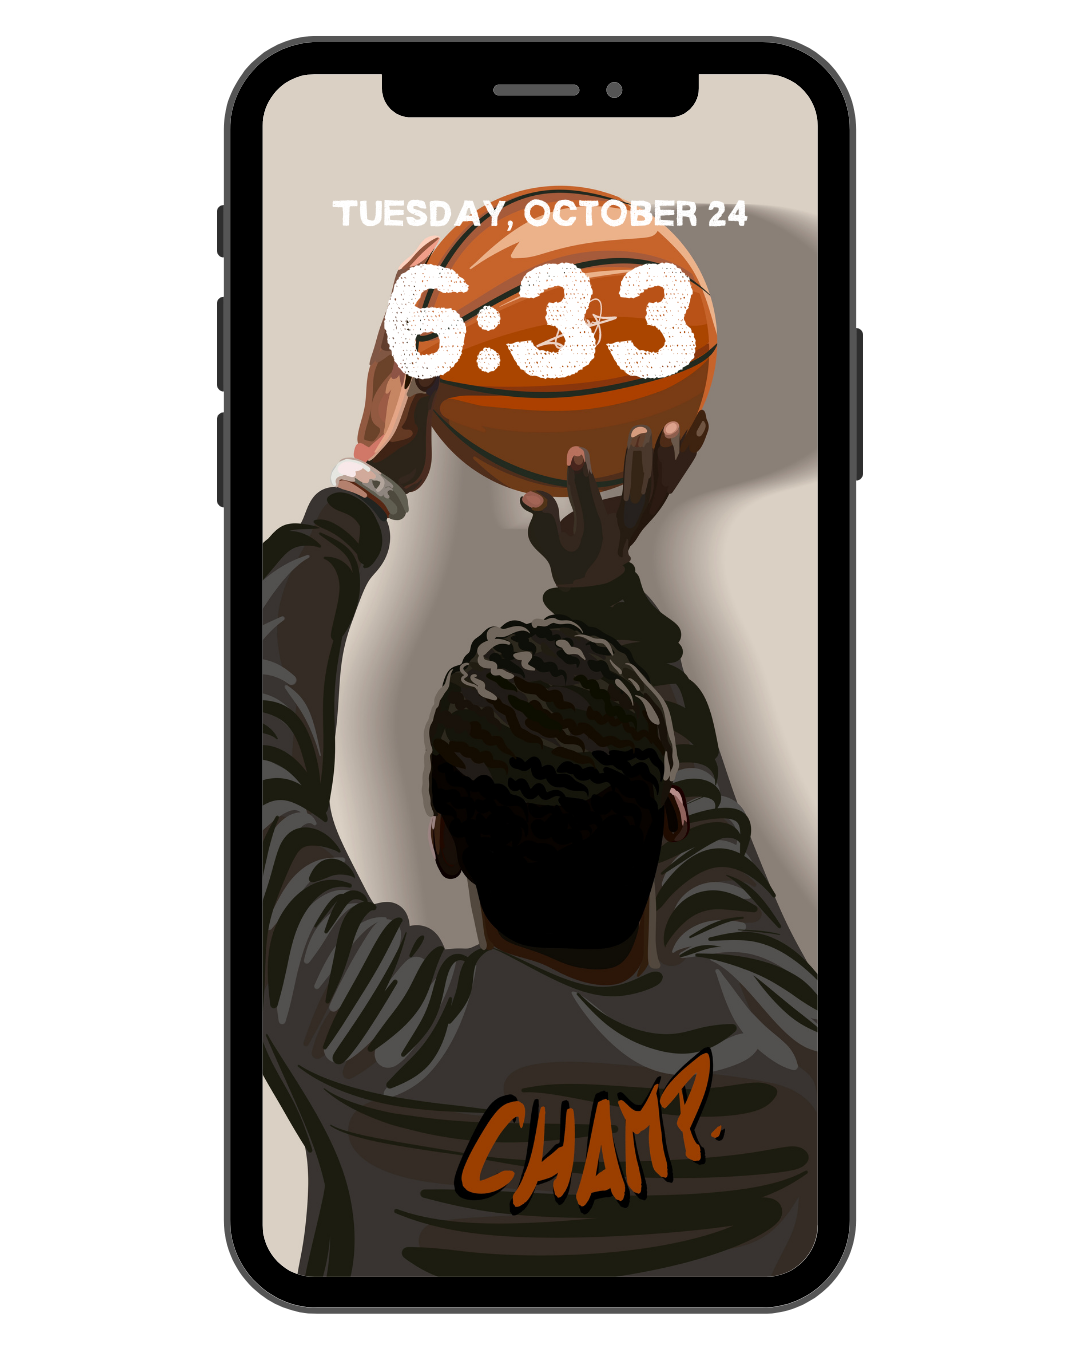 Champ - Phone Screensaver